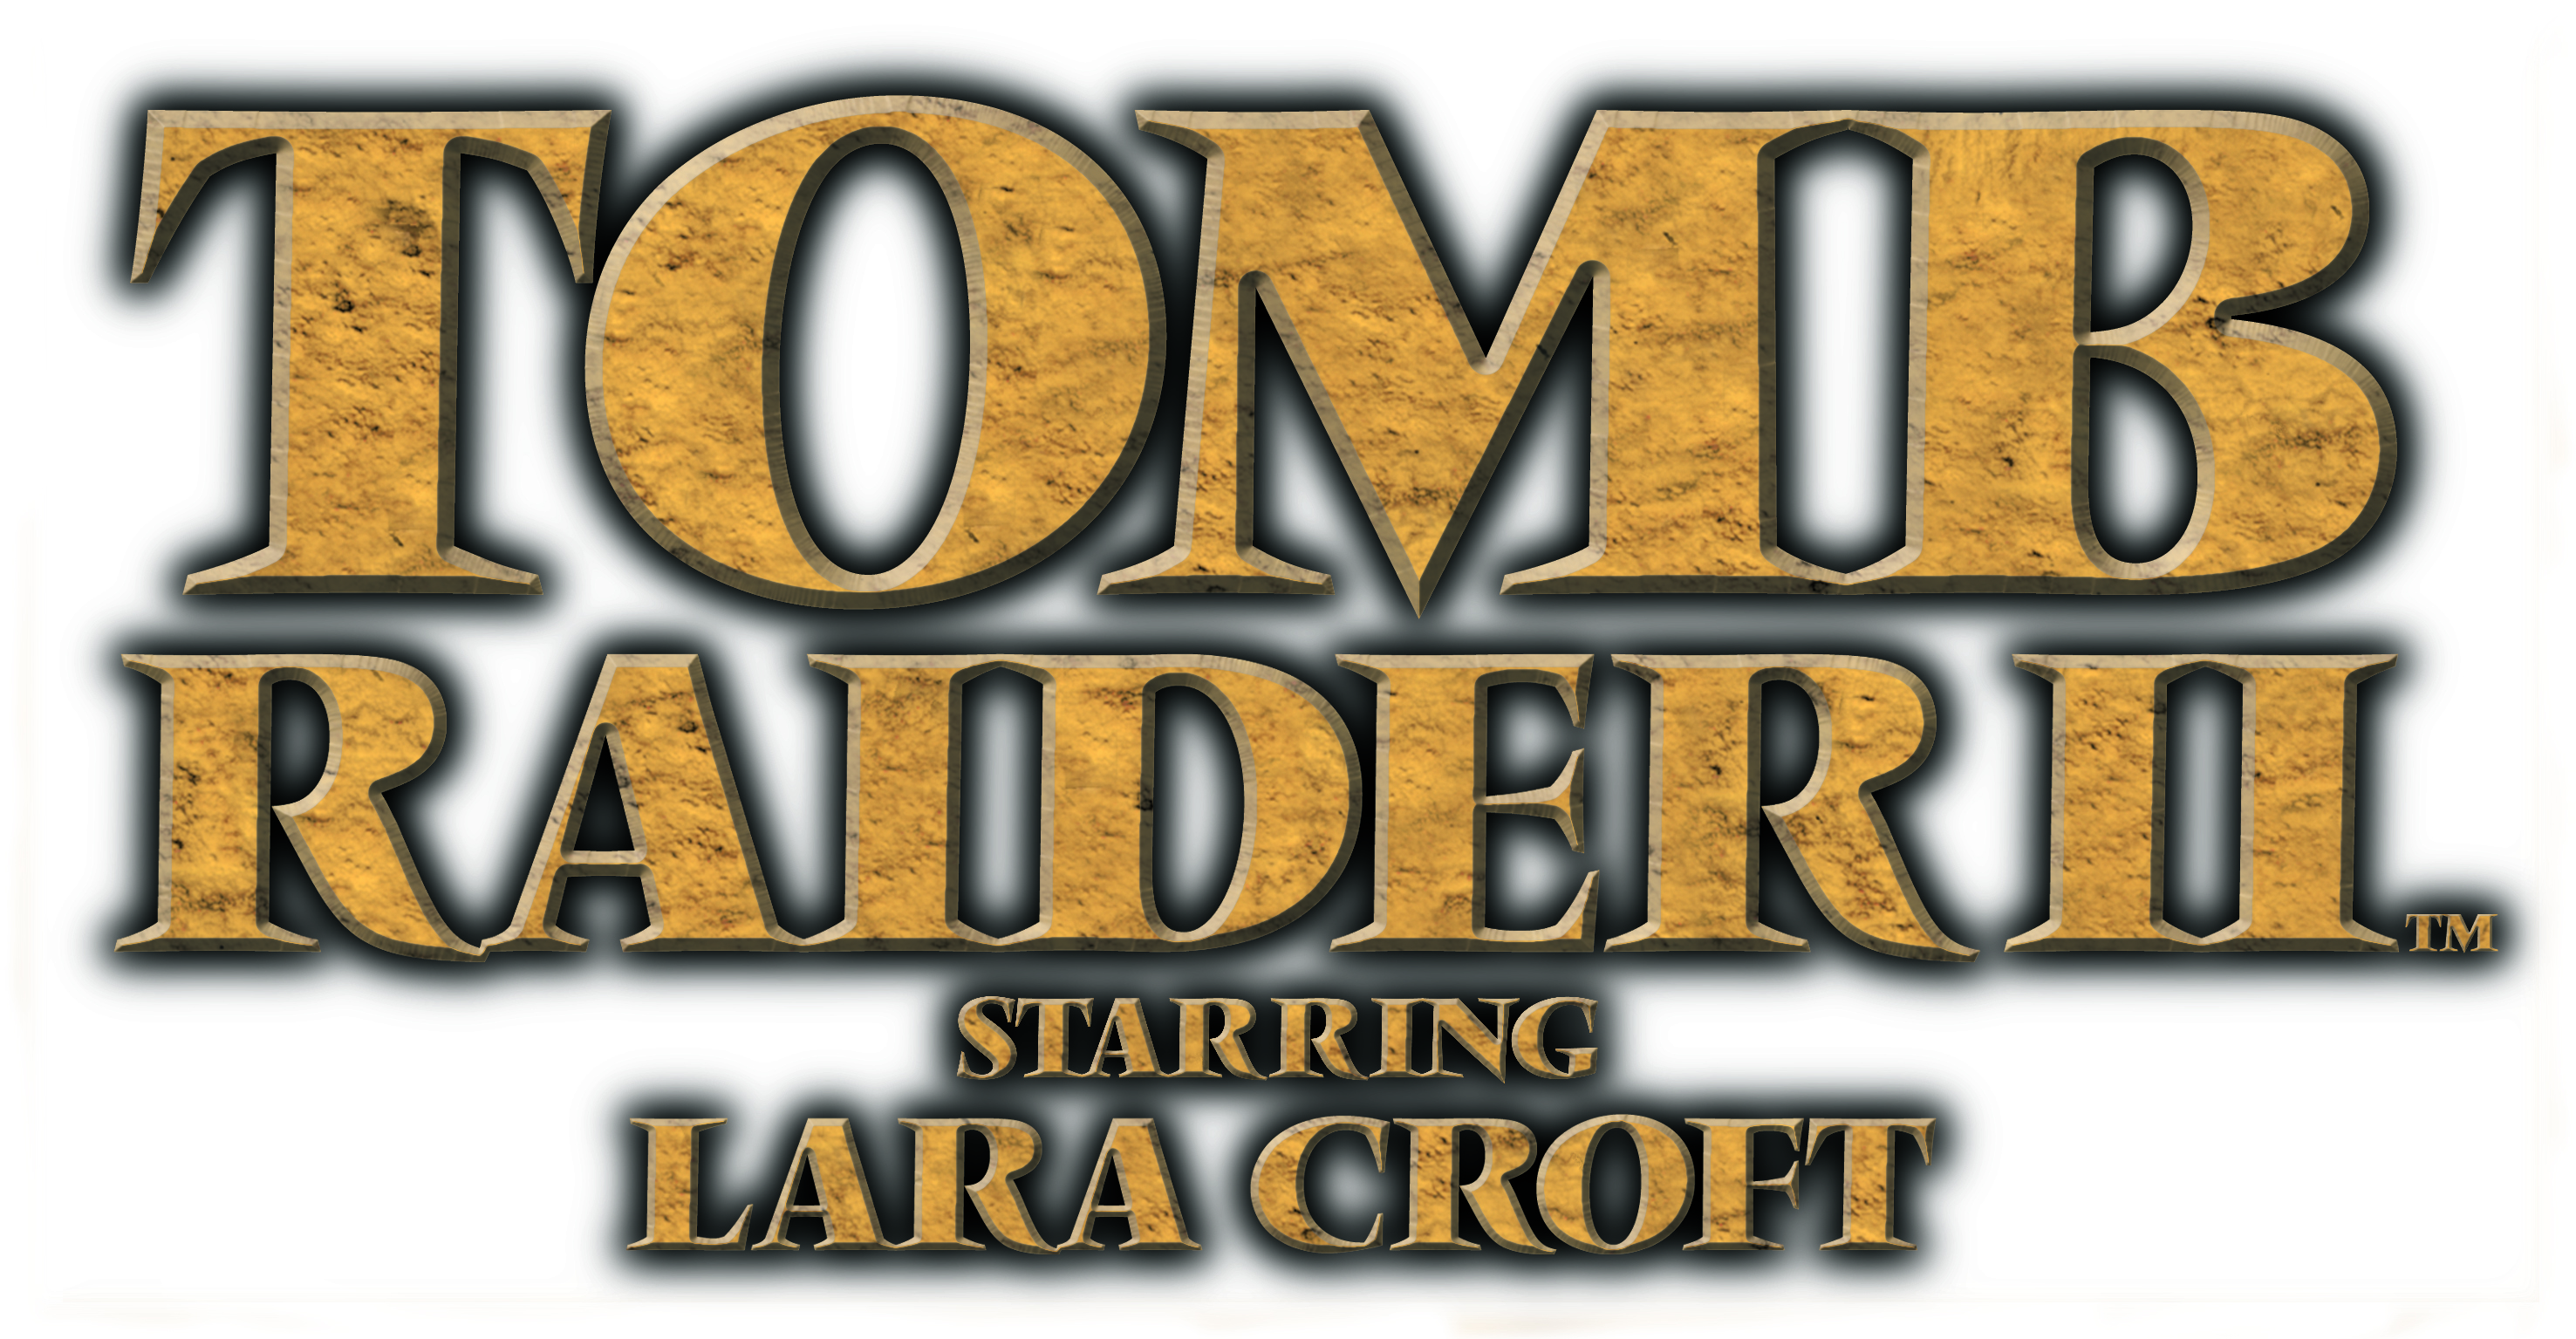 Tomb Raider II EU Logo - 1997.jpg